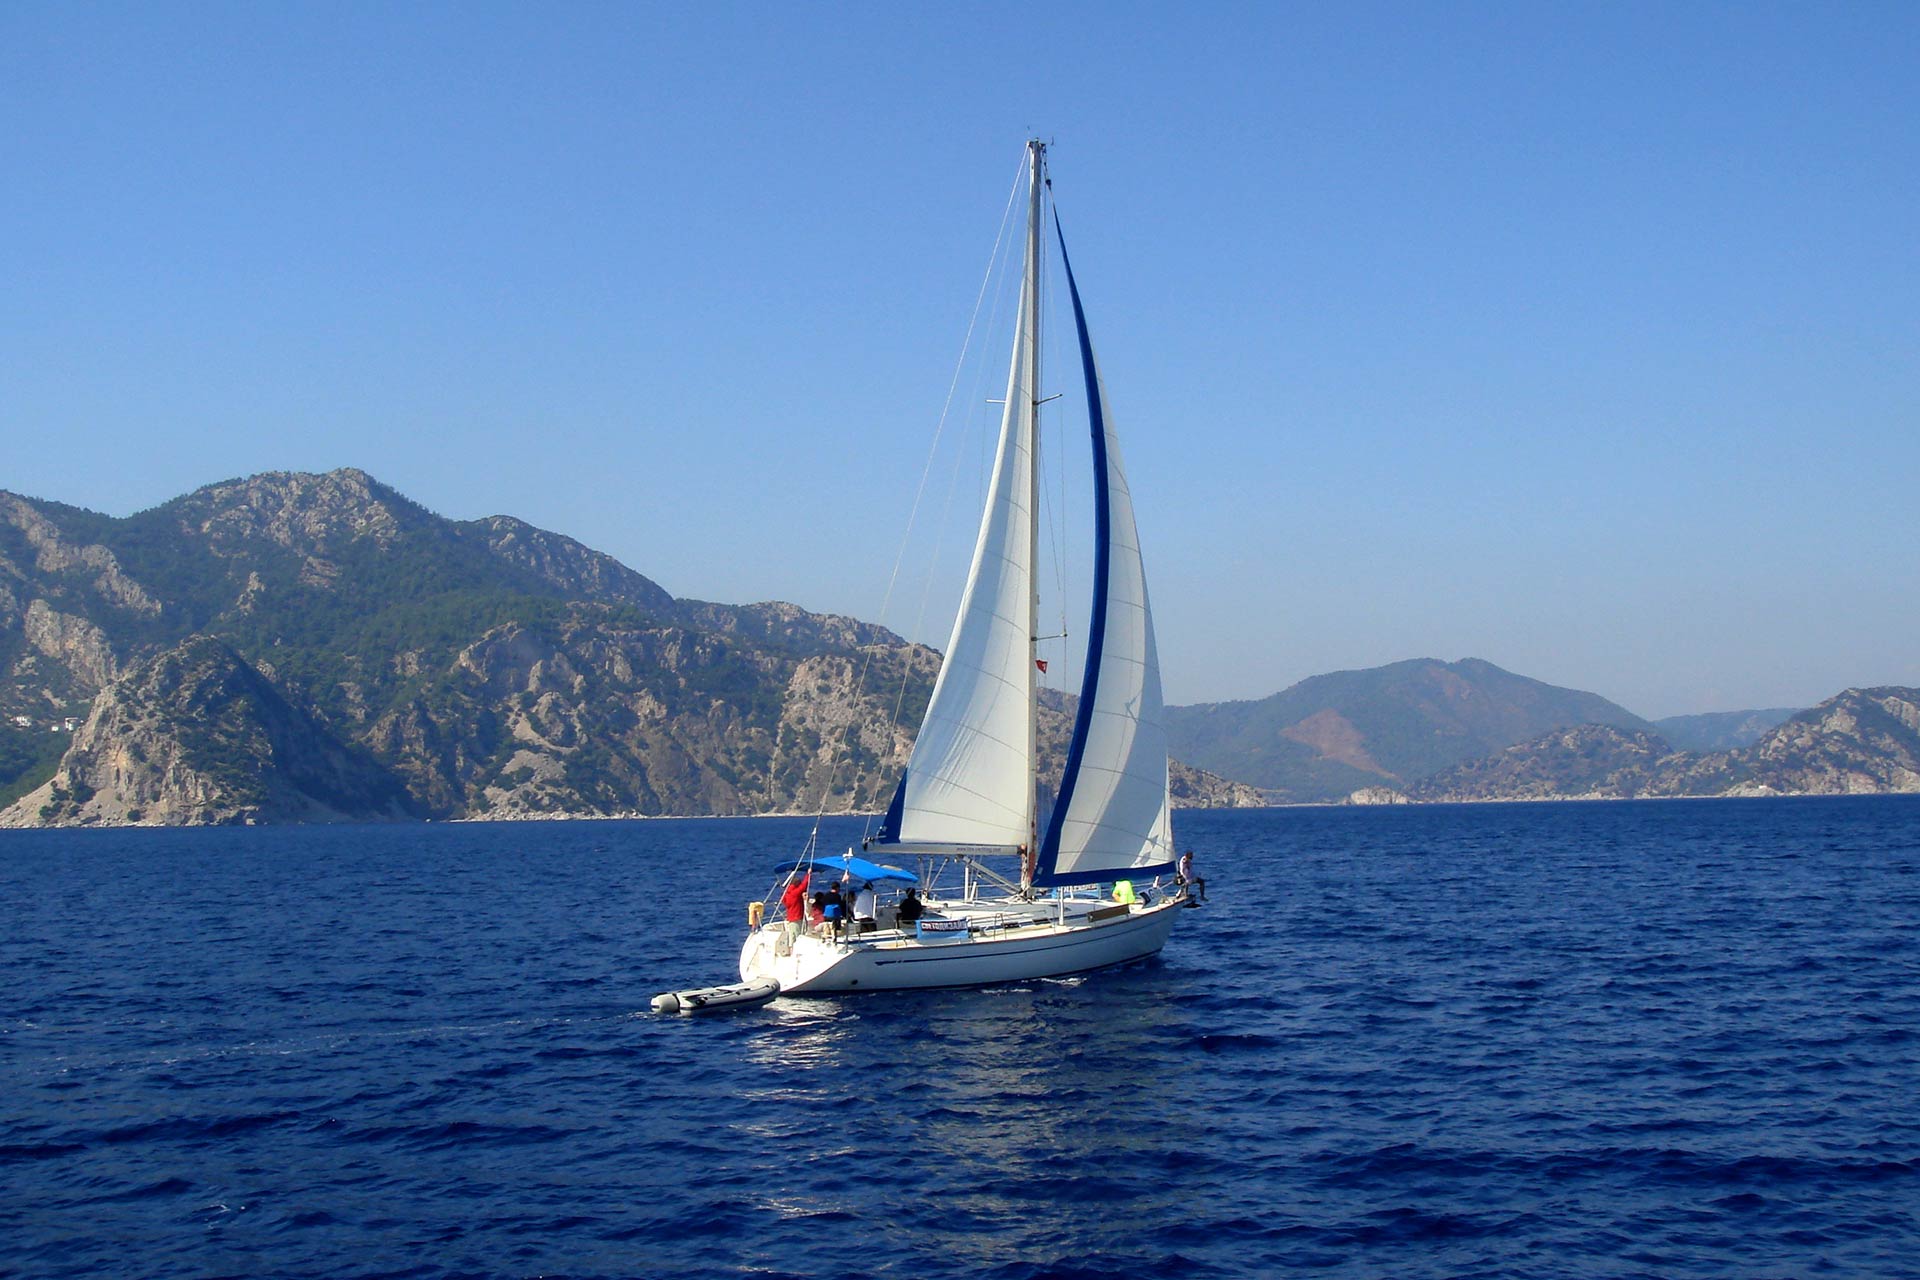 yacht-with-white-sail-sailing-on-a-calm-sea-on-a-b-2022-05-11-22-46-02-utc